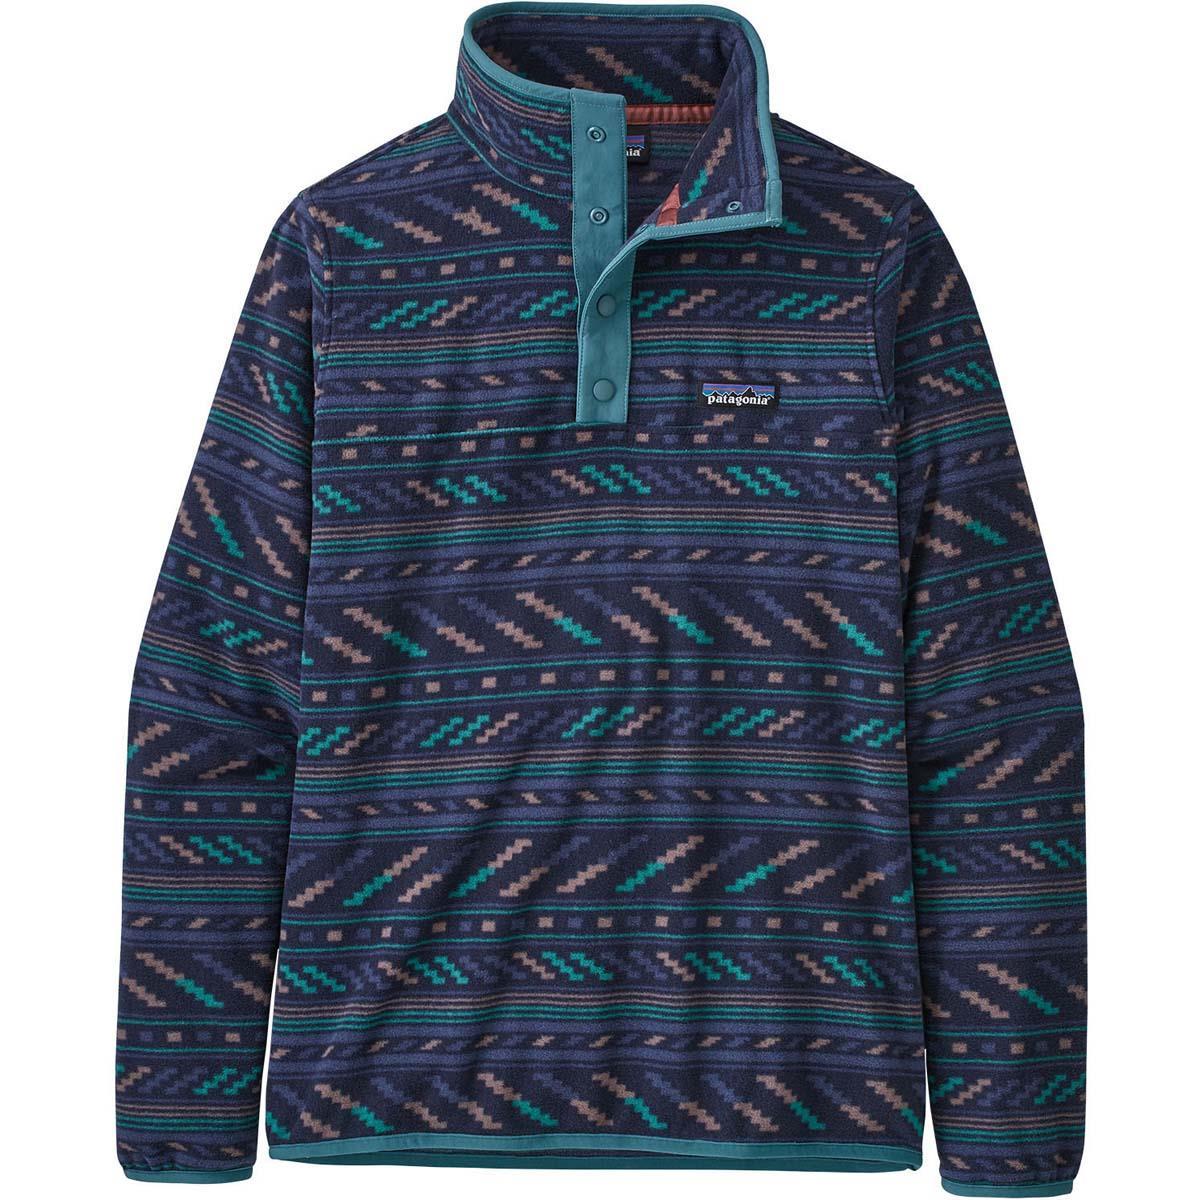 Patagonia synchilla snap T fleece sweater jacket XL women's